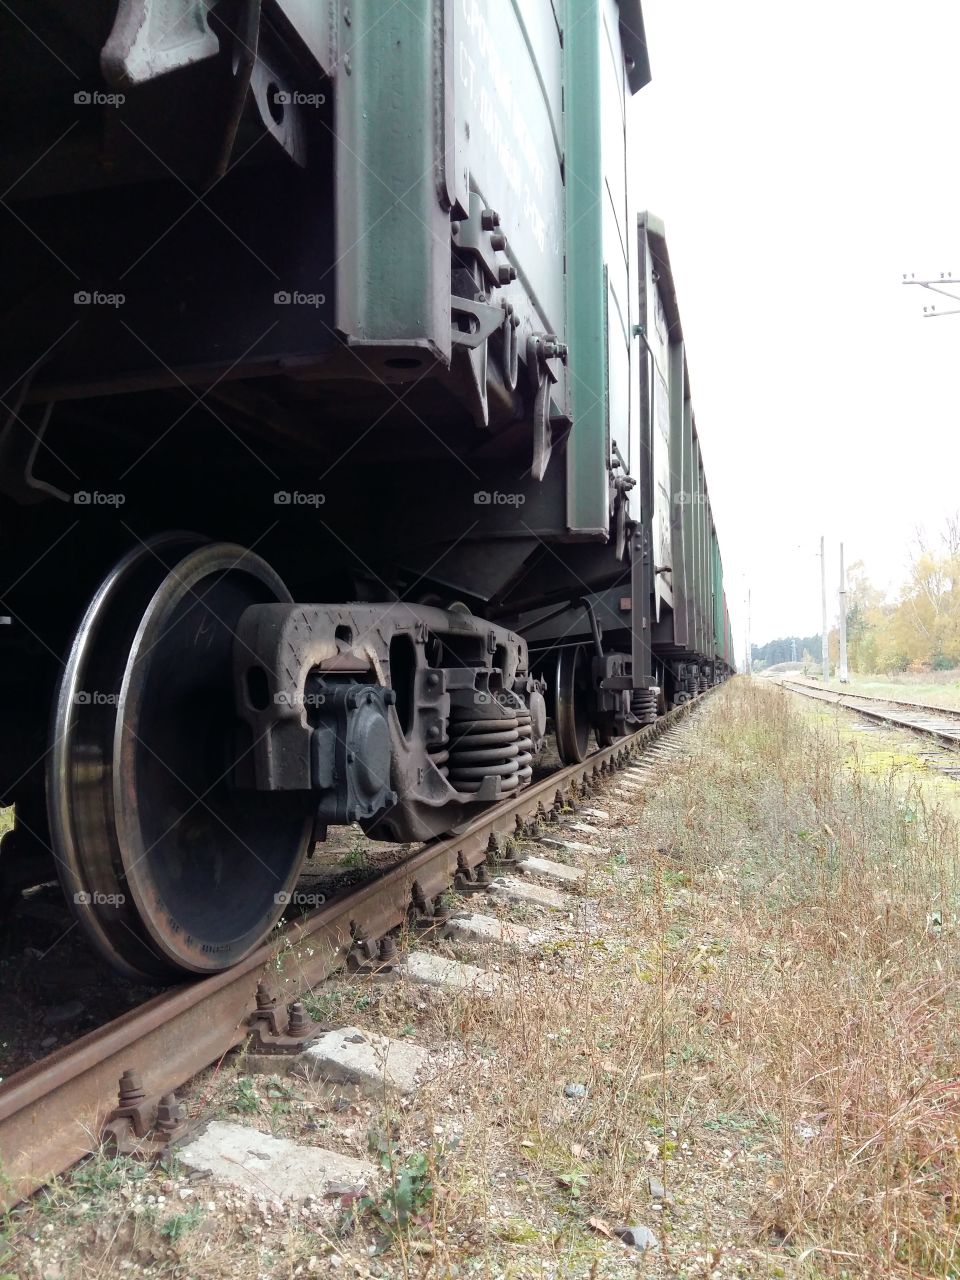 Railway truck closeup on the rails with big wheels